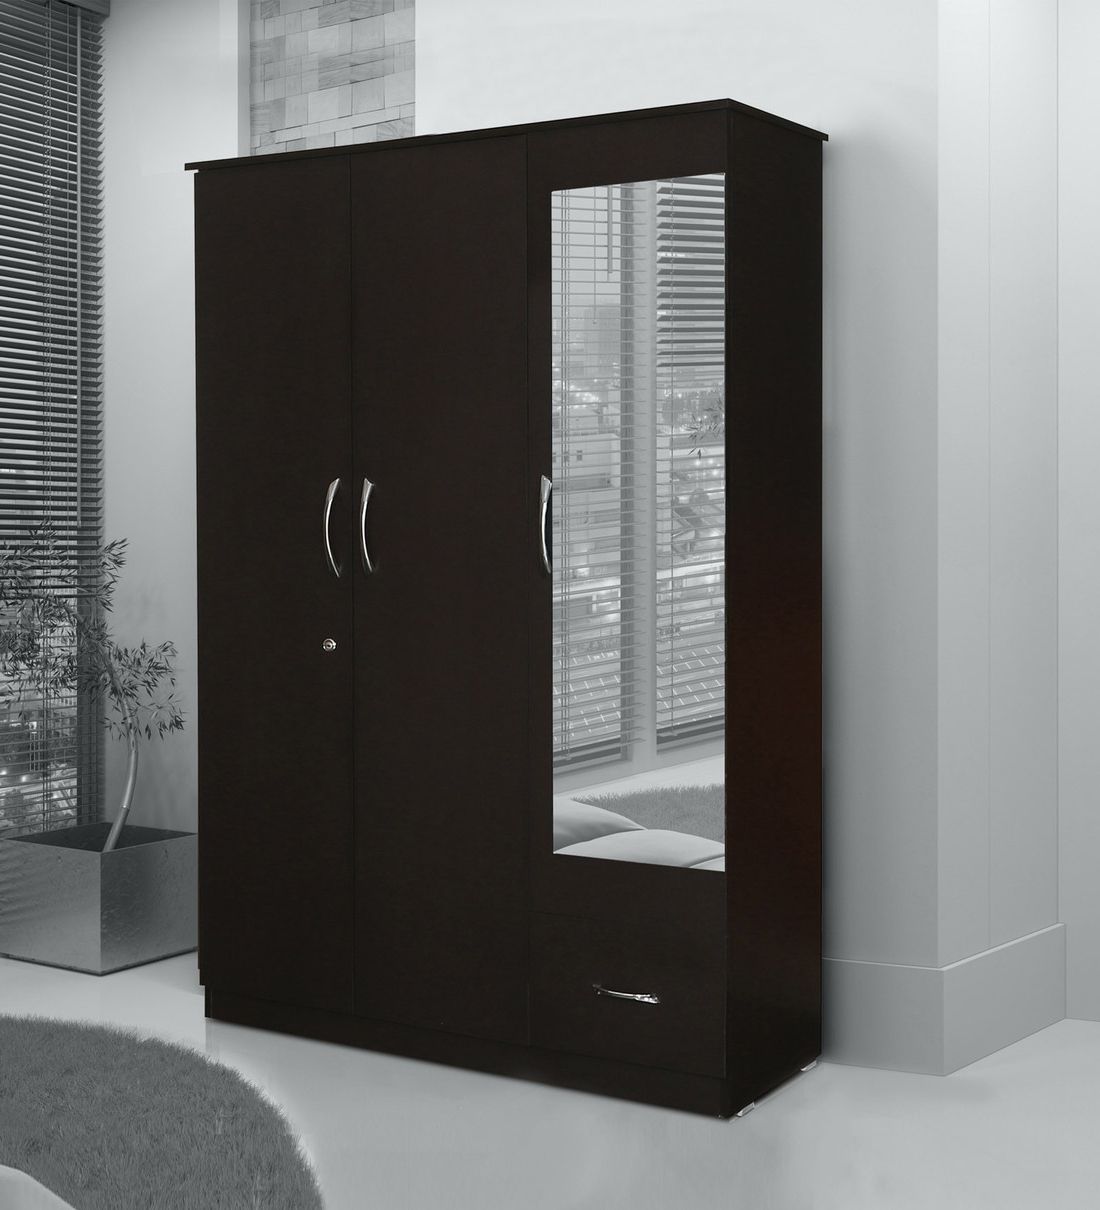 Buy Trois 3 Door Wardrobe In Wenge Finish With Mirror At 22% Off Fullstock | Pepperfry With 3 Door Black Wardrobes (Gallery 18 of 20)